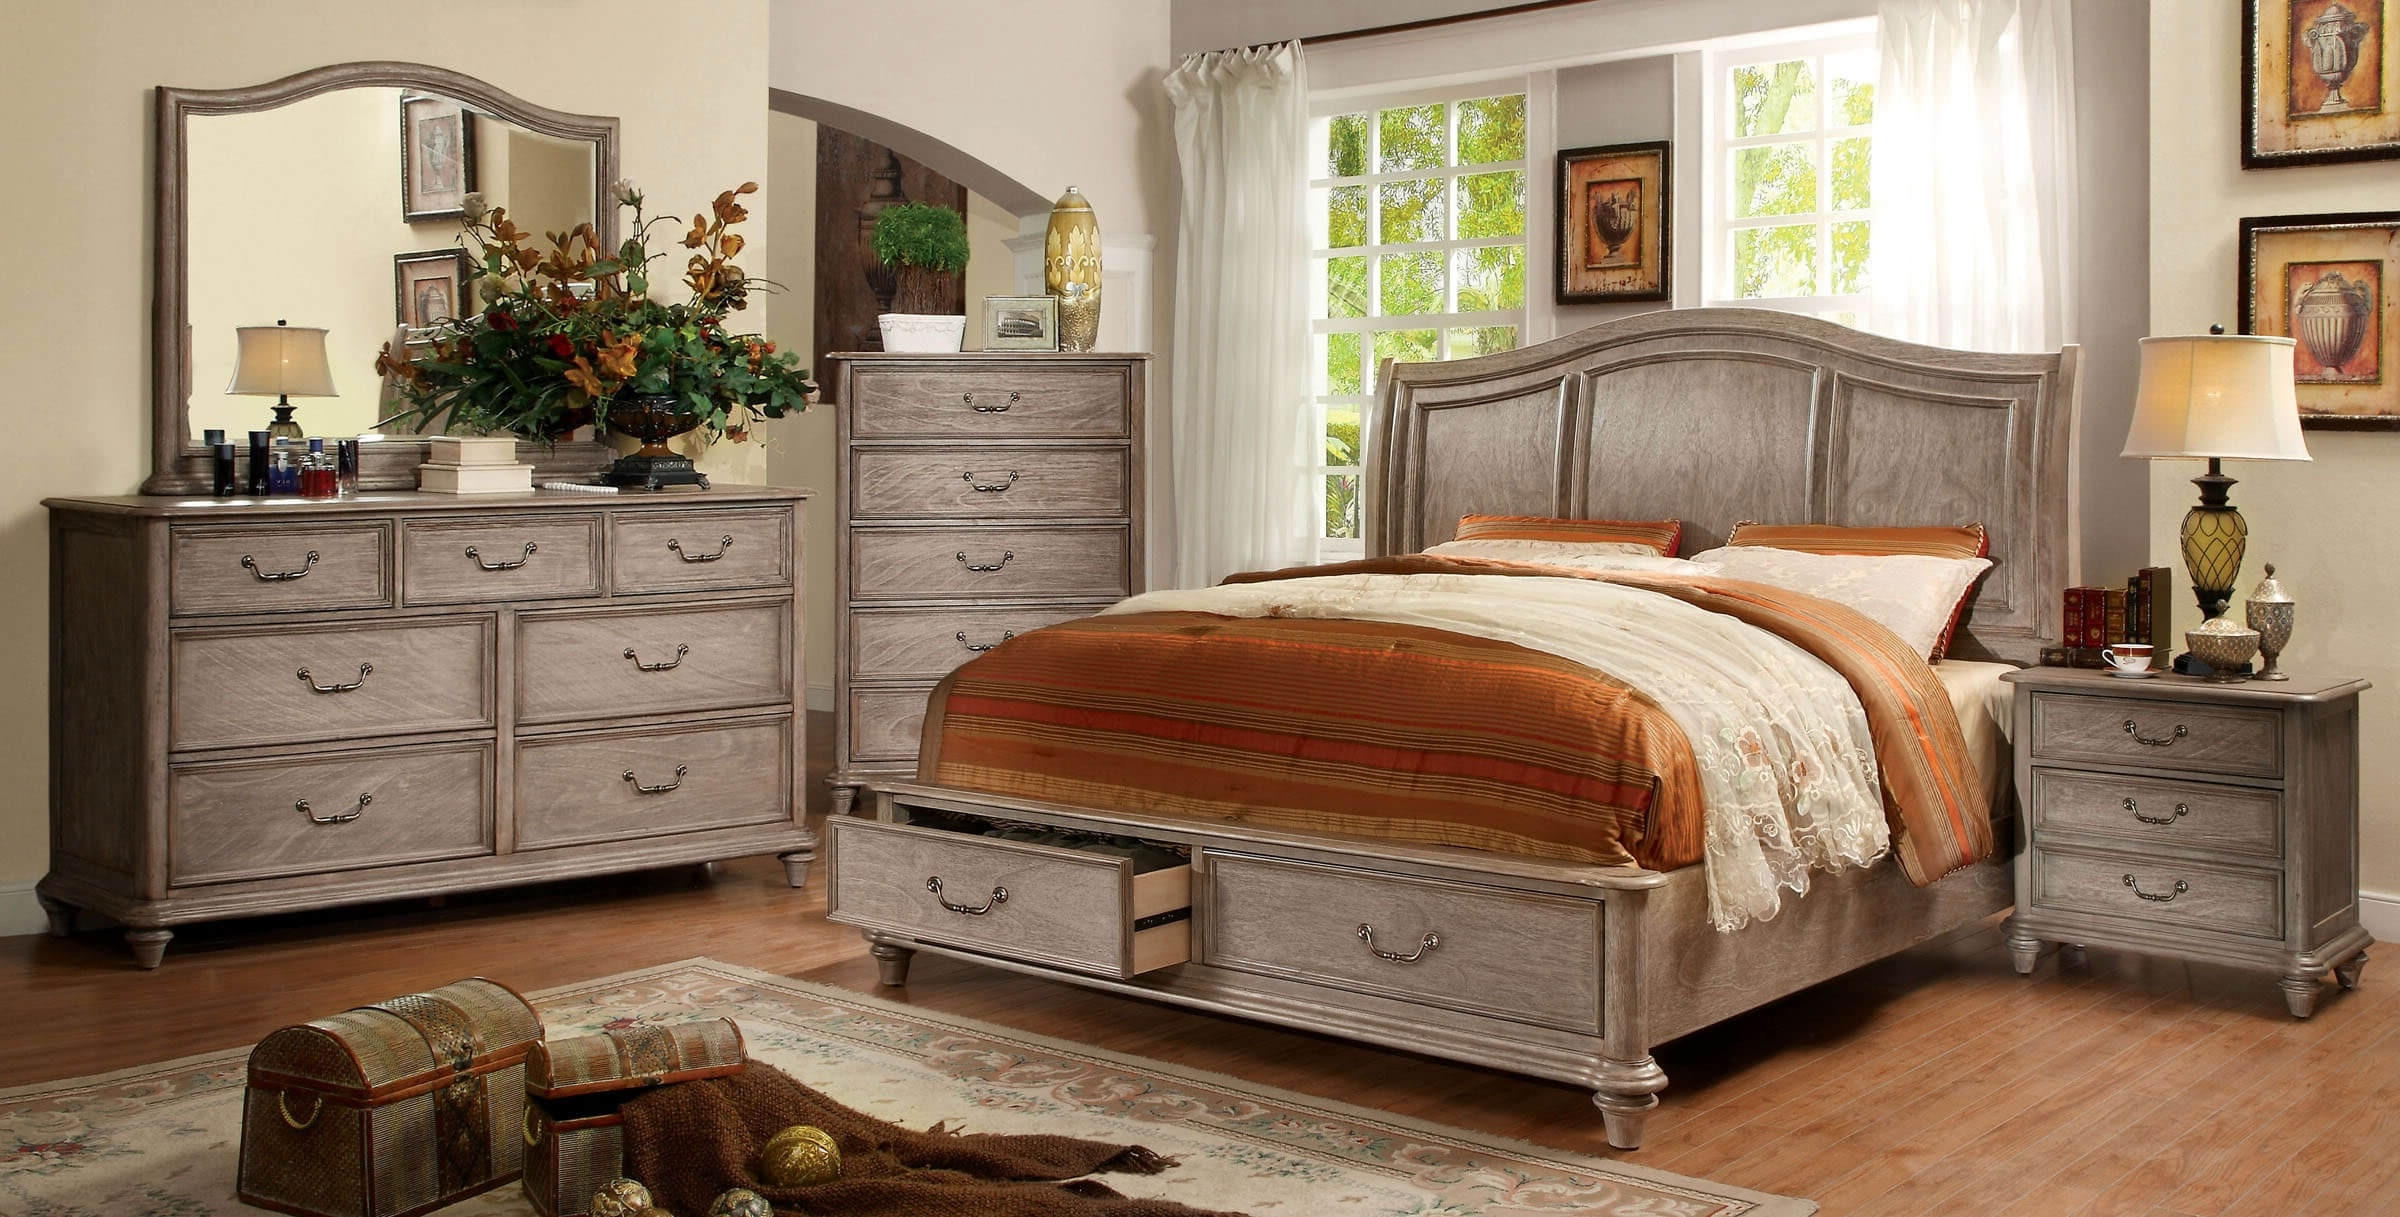 Rustic Bedroom Furniture Sets
 Bedroom Remarkable Rustic Bedroom Sets Design For Bedroom